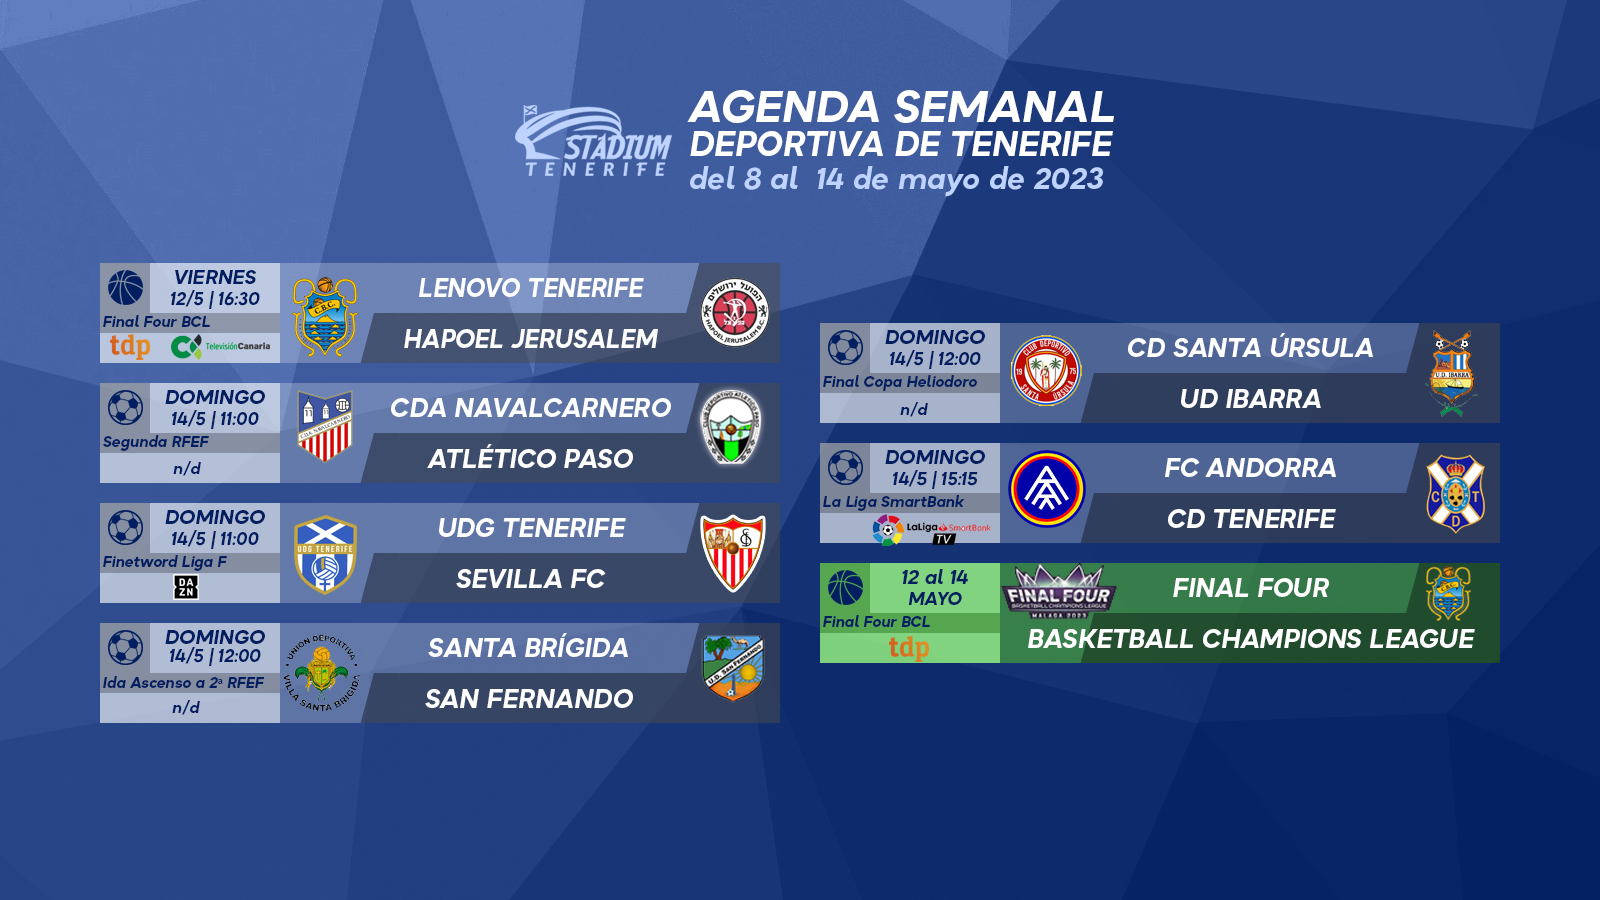 Agenda Semanal Deportiva de Tenerife (8 al 14 de mayo)